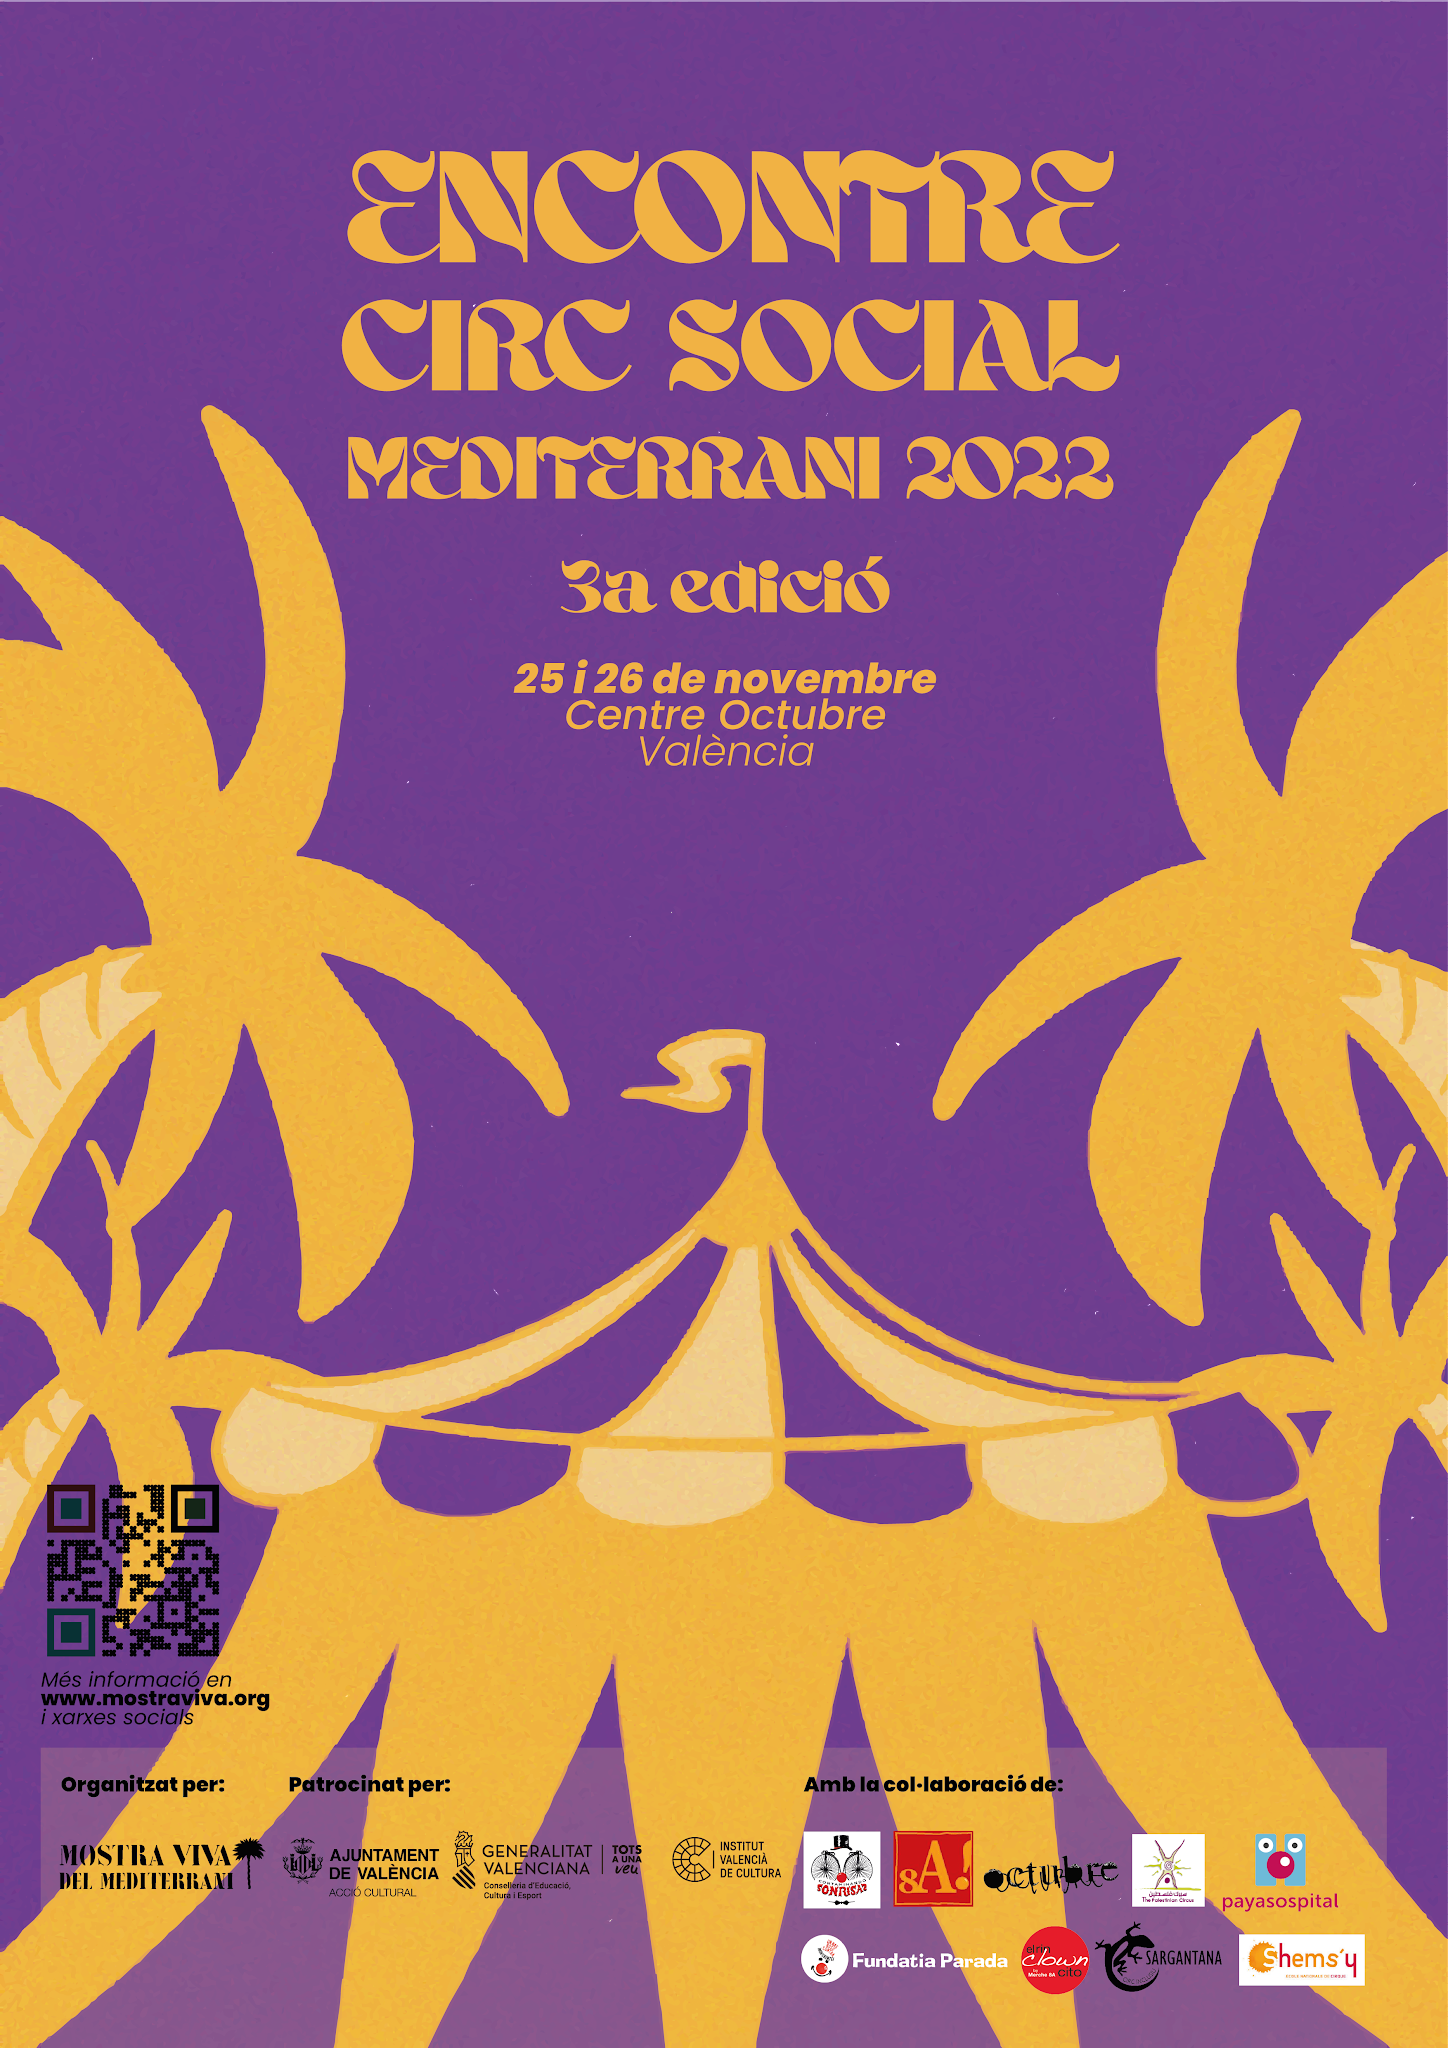 Mostra Viva del Mediterrani presenta el 3º Encuentro de Circo Social Mediterráneo